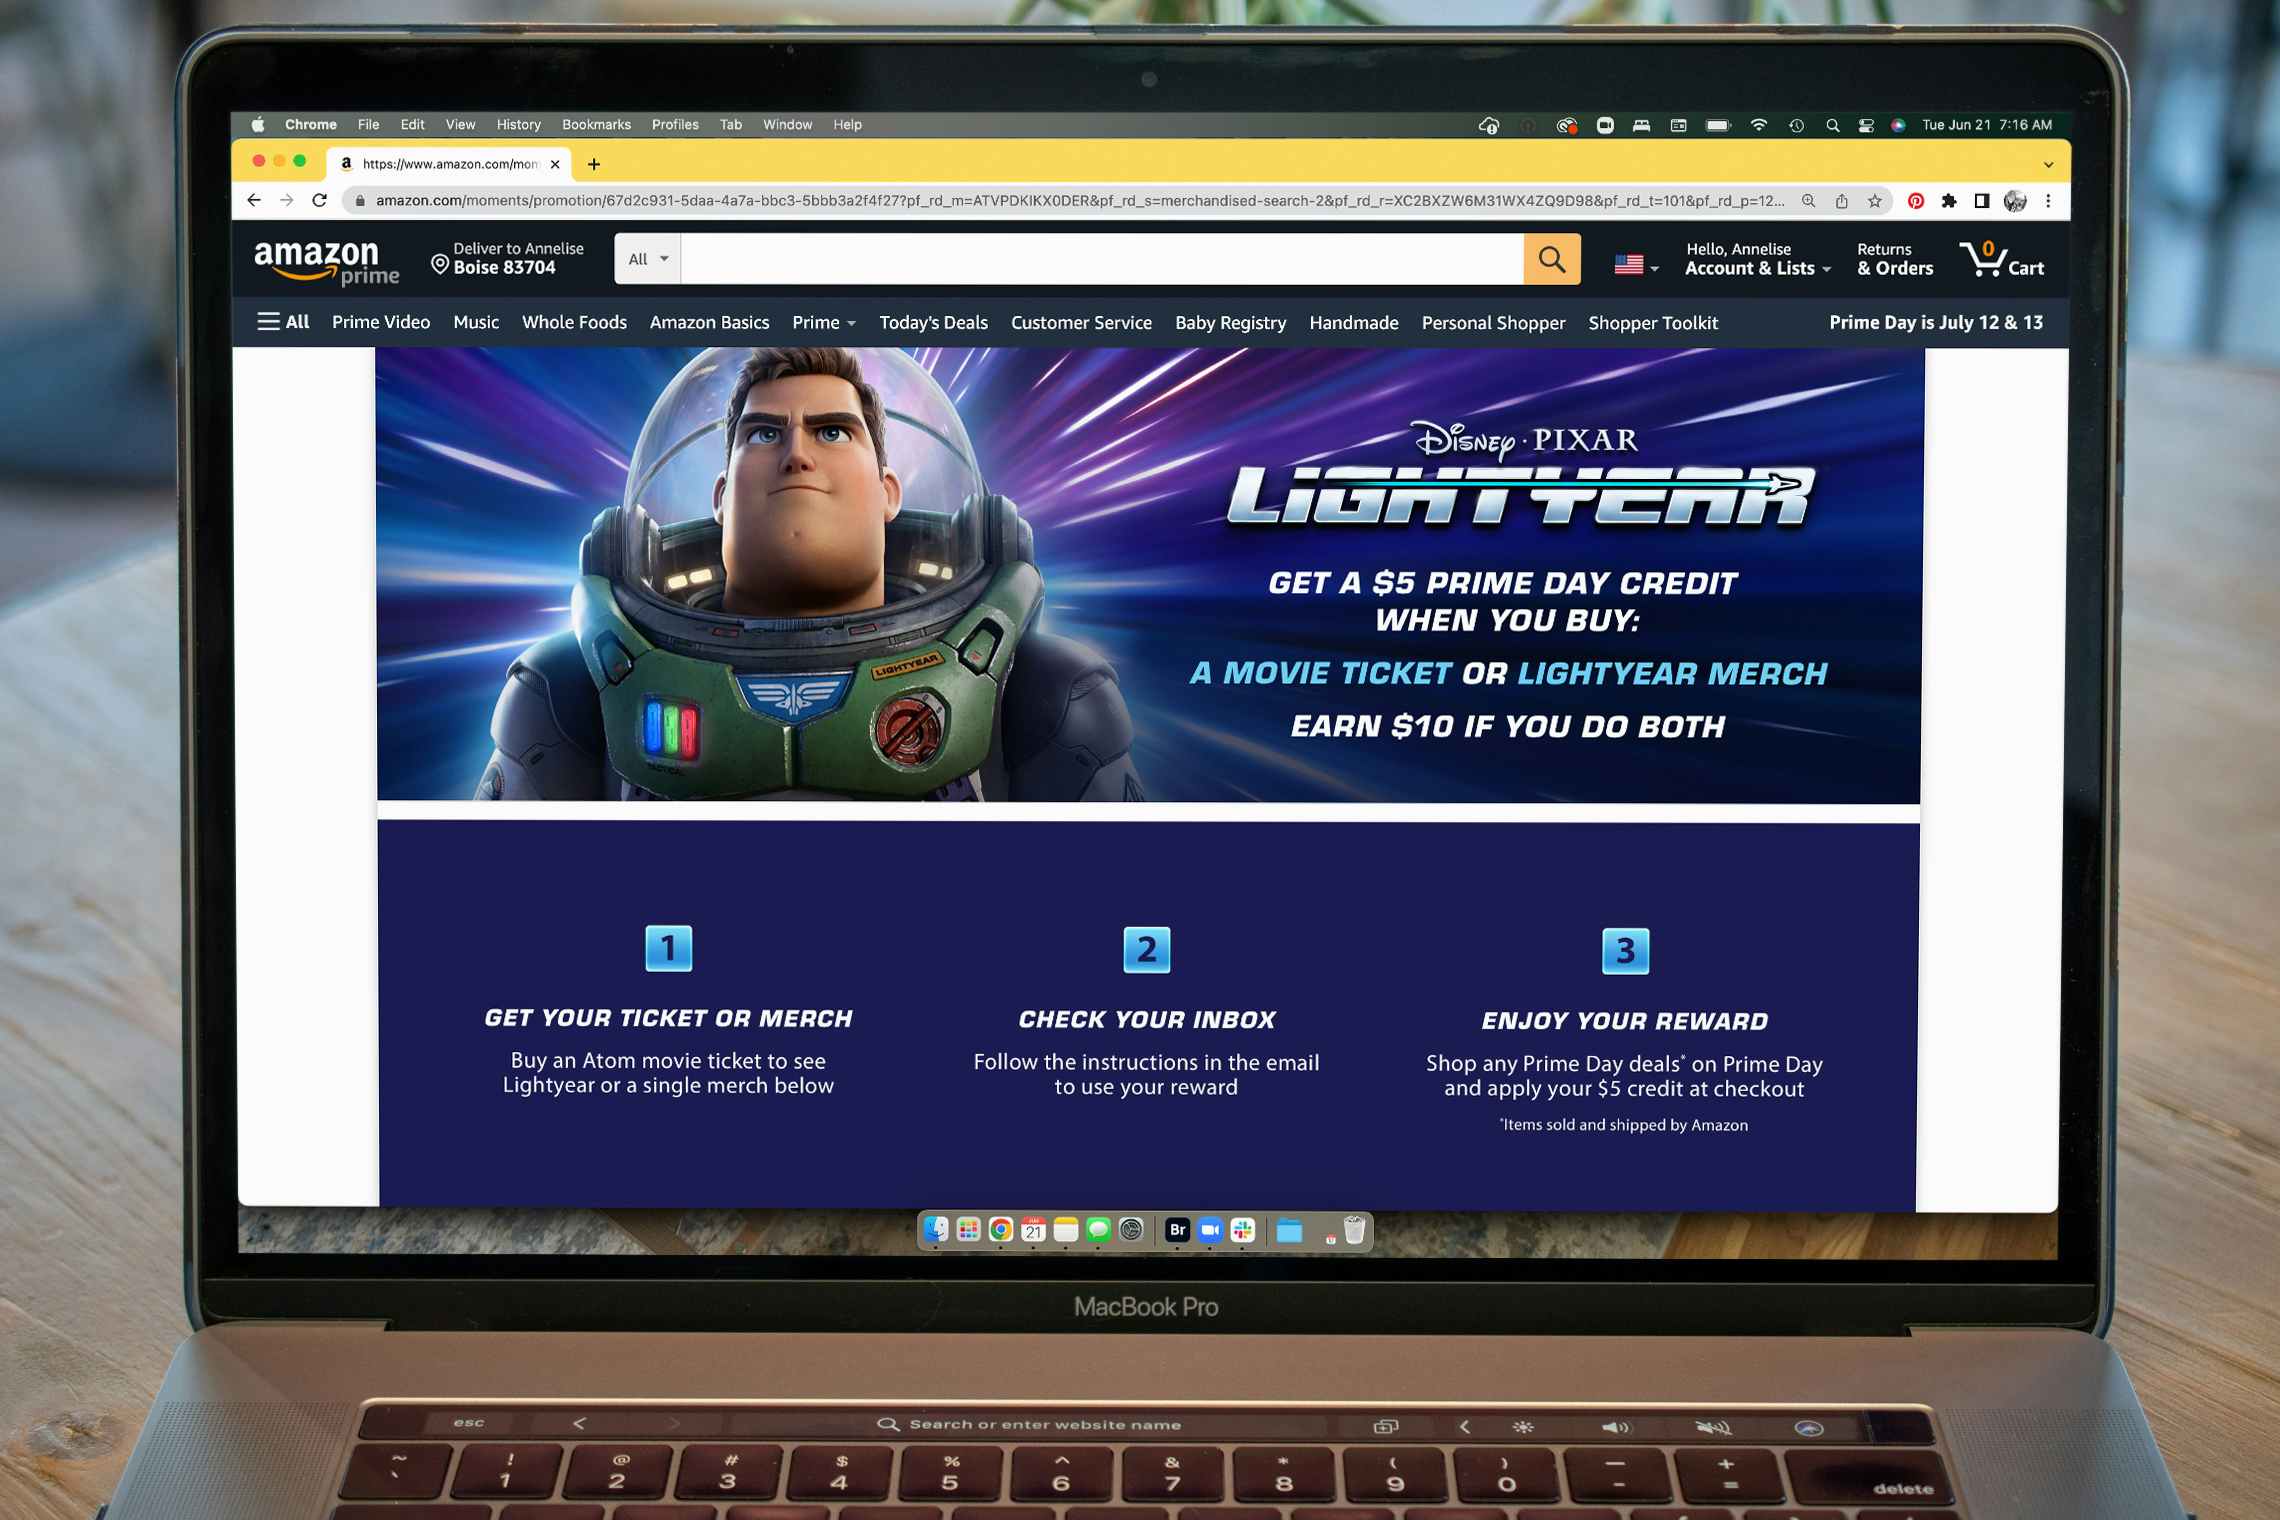 Amazon prime promo on a computer screen for Disney Pixar Lightyear.